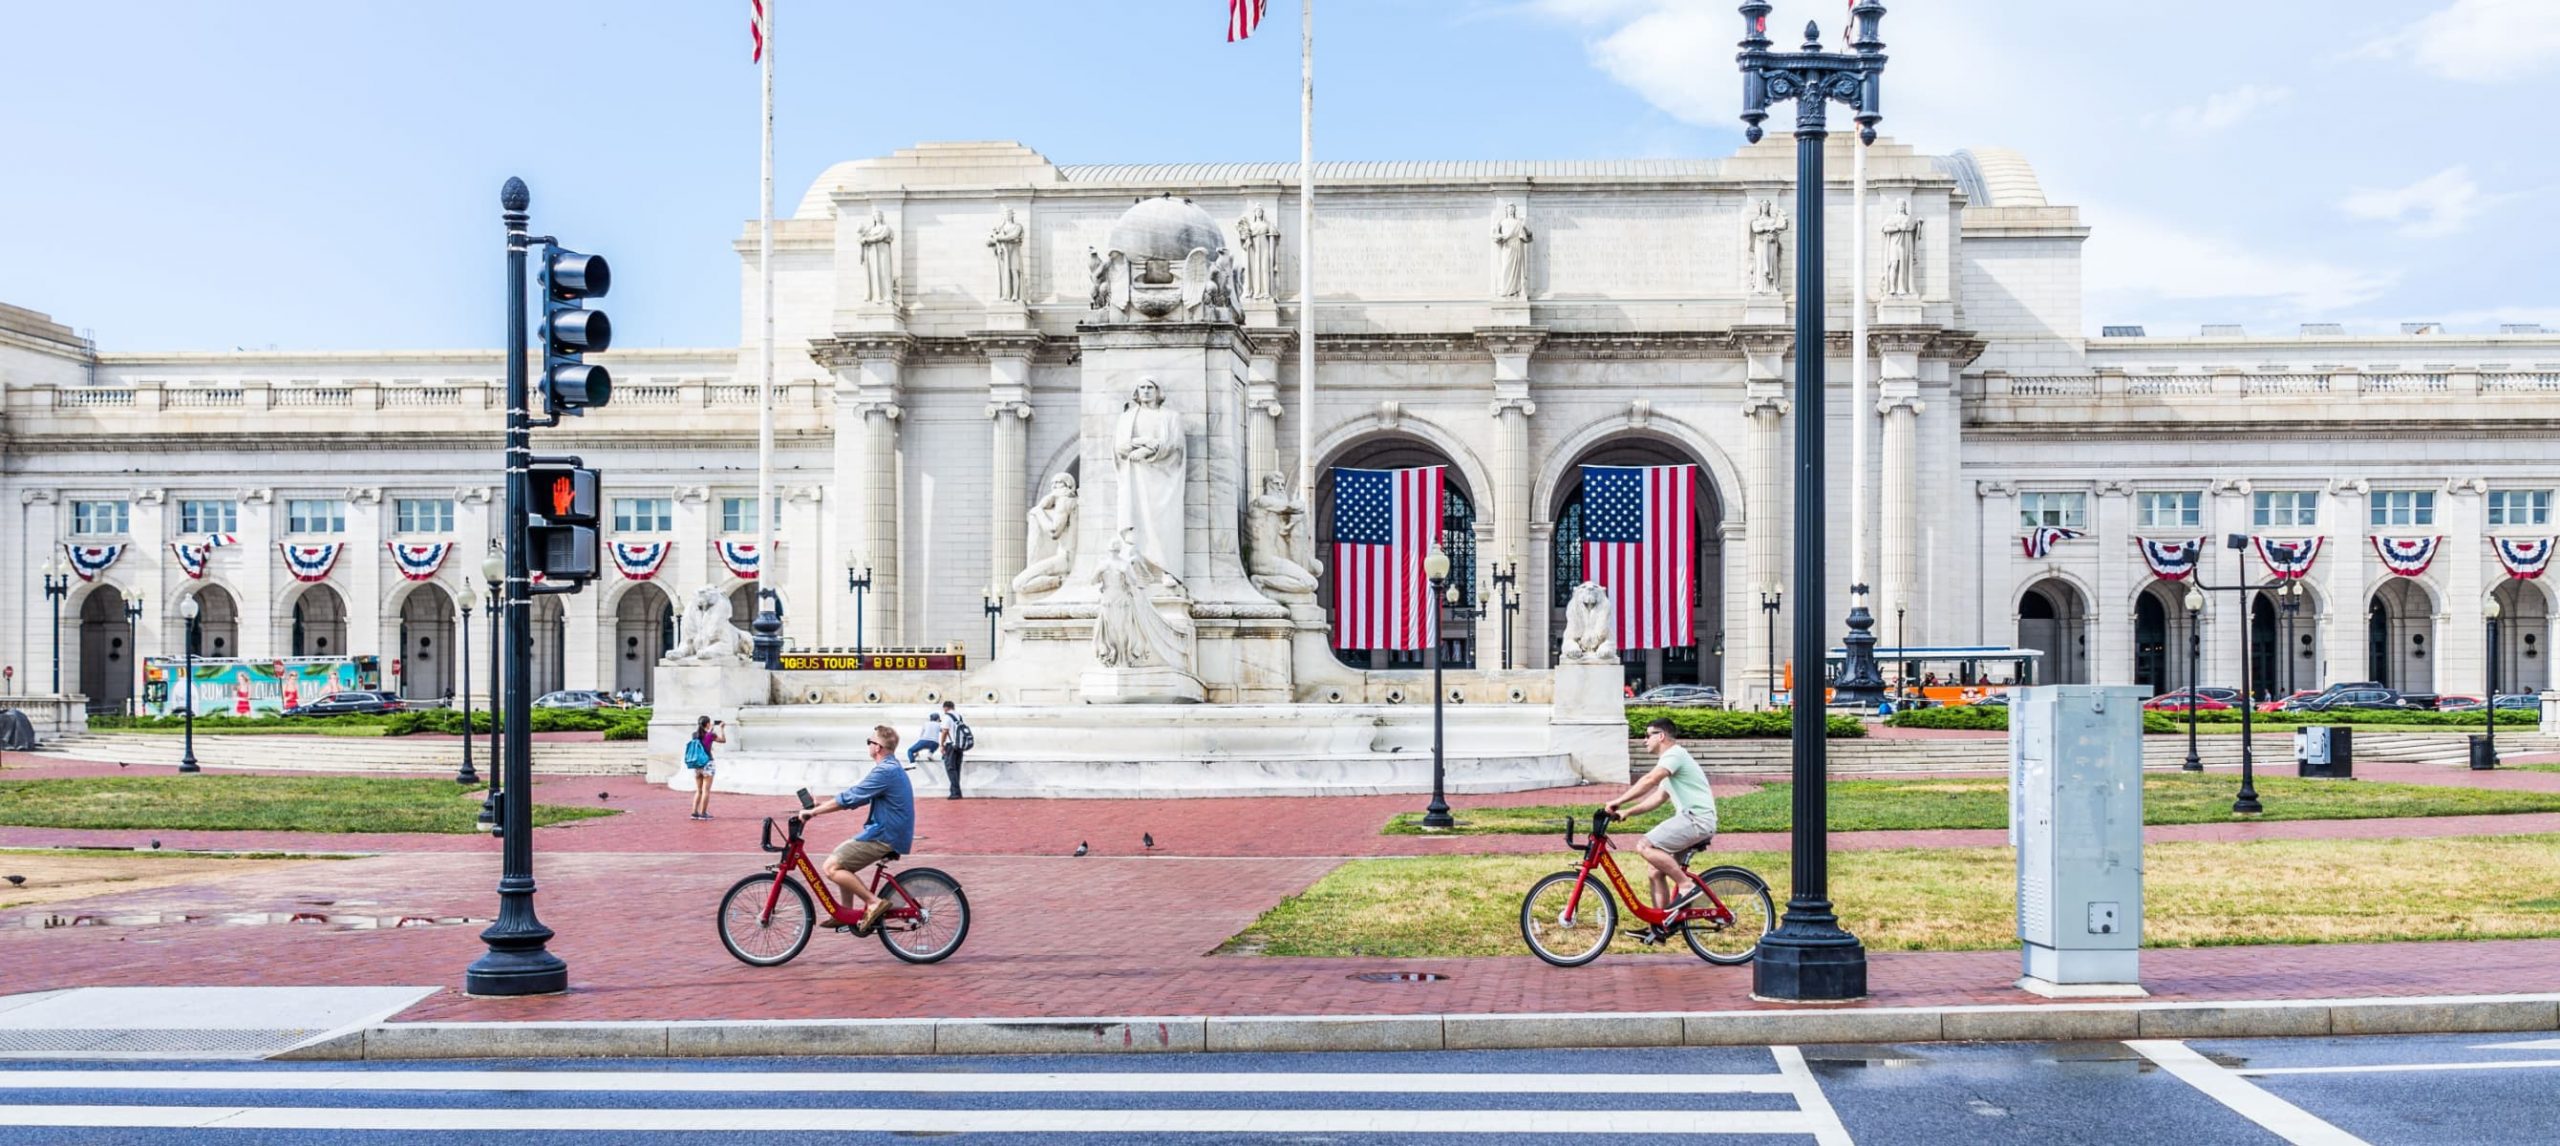 People biking in Washington DC